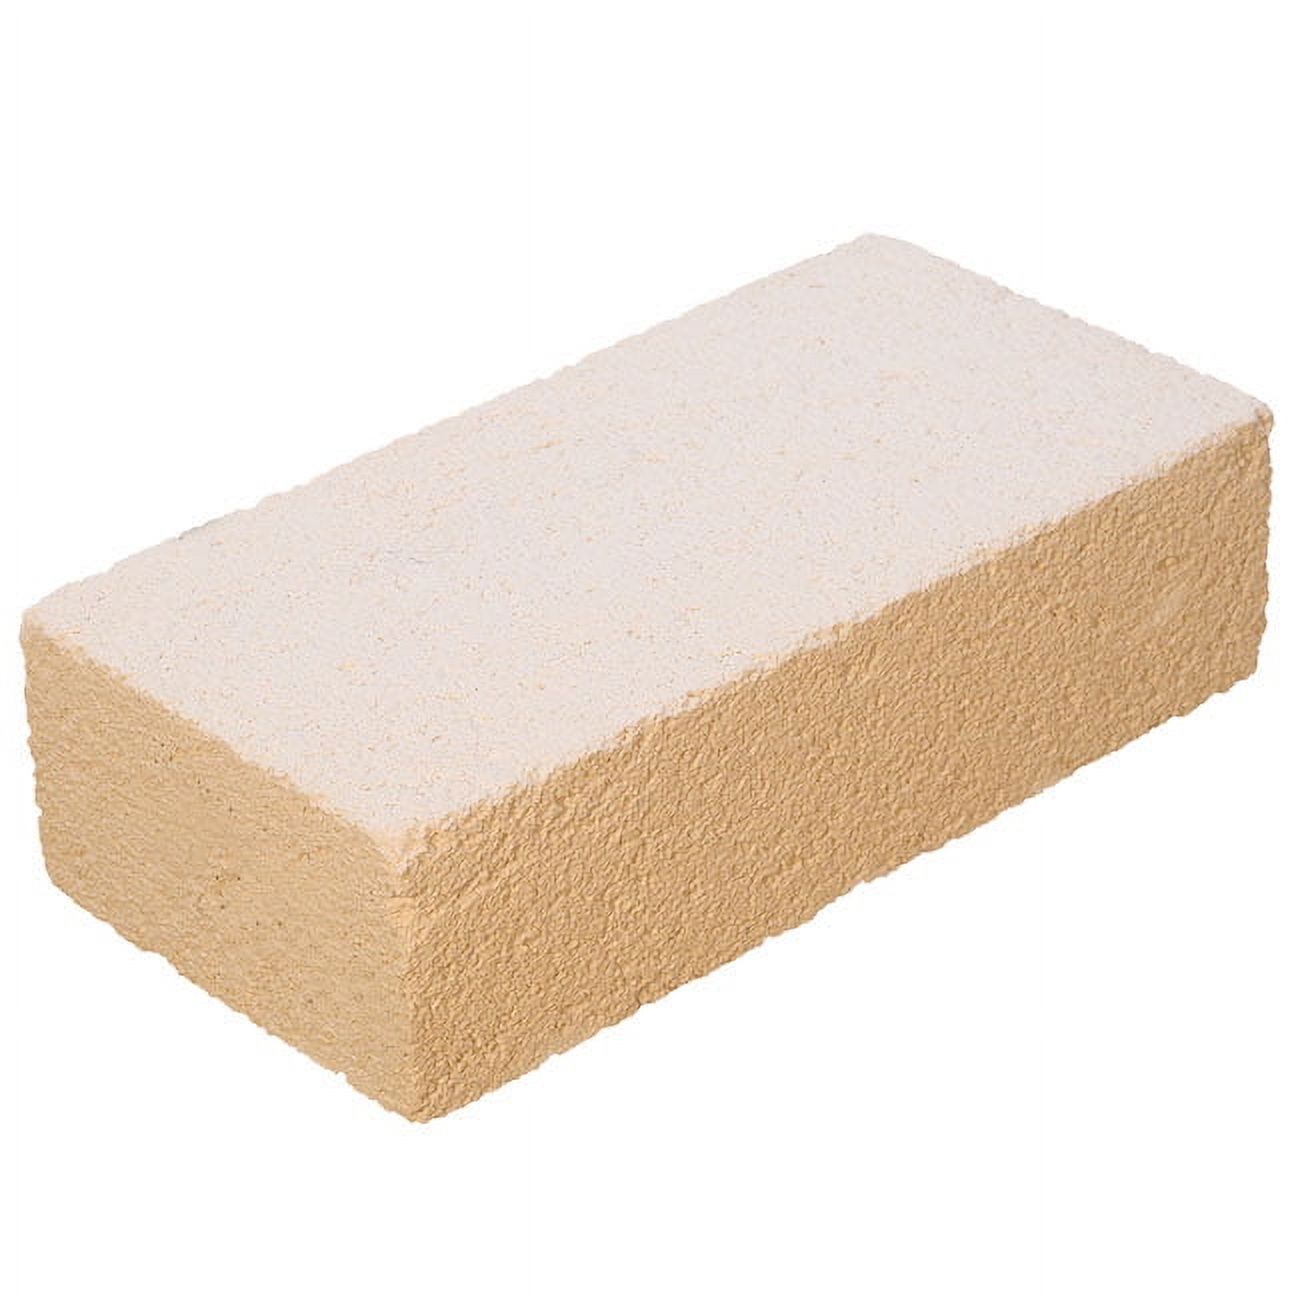 Eurotool Fire Brick 9x4.5x2.5 Inches, 1 Piece